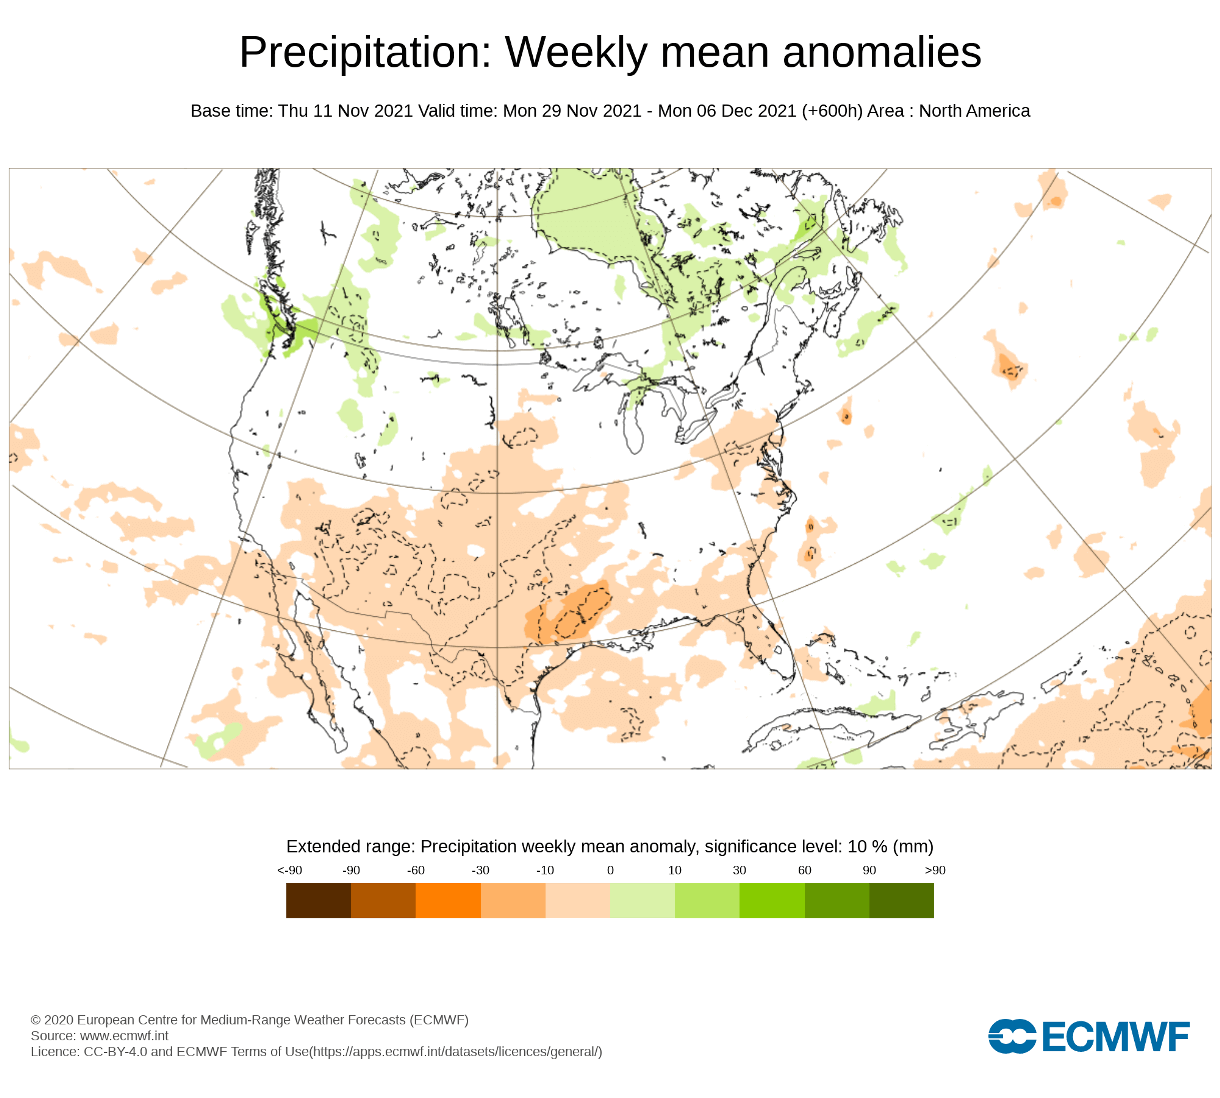 ecmwf-december-weather-forecast-winter-season-week-1-united-states-precipitation-anomaly